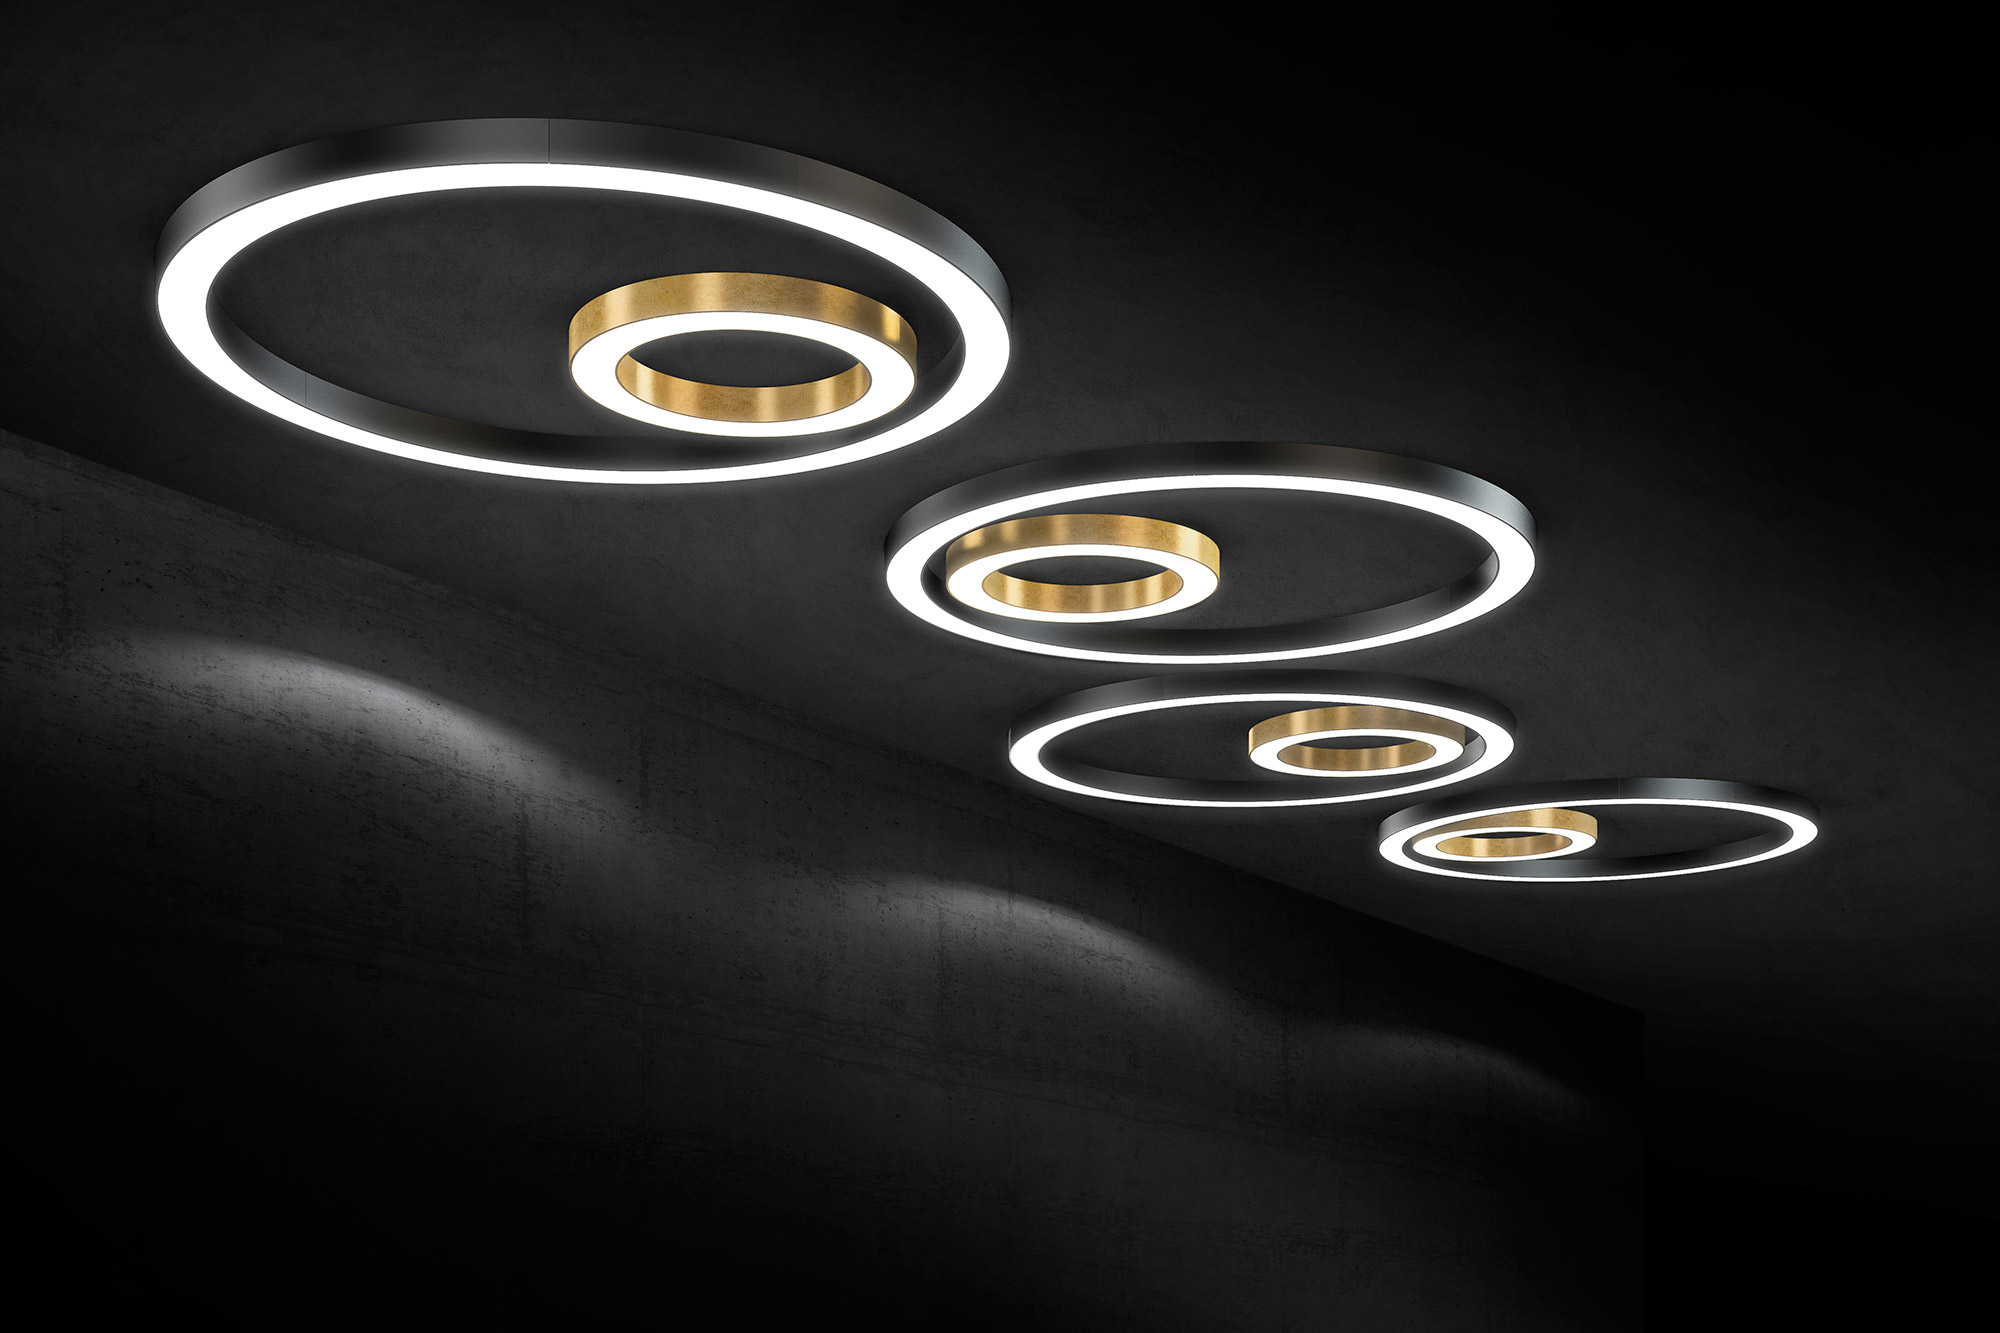 Silver ring design lighting